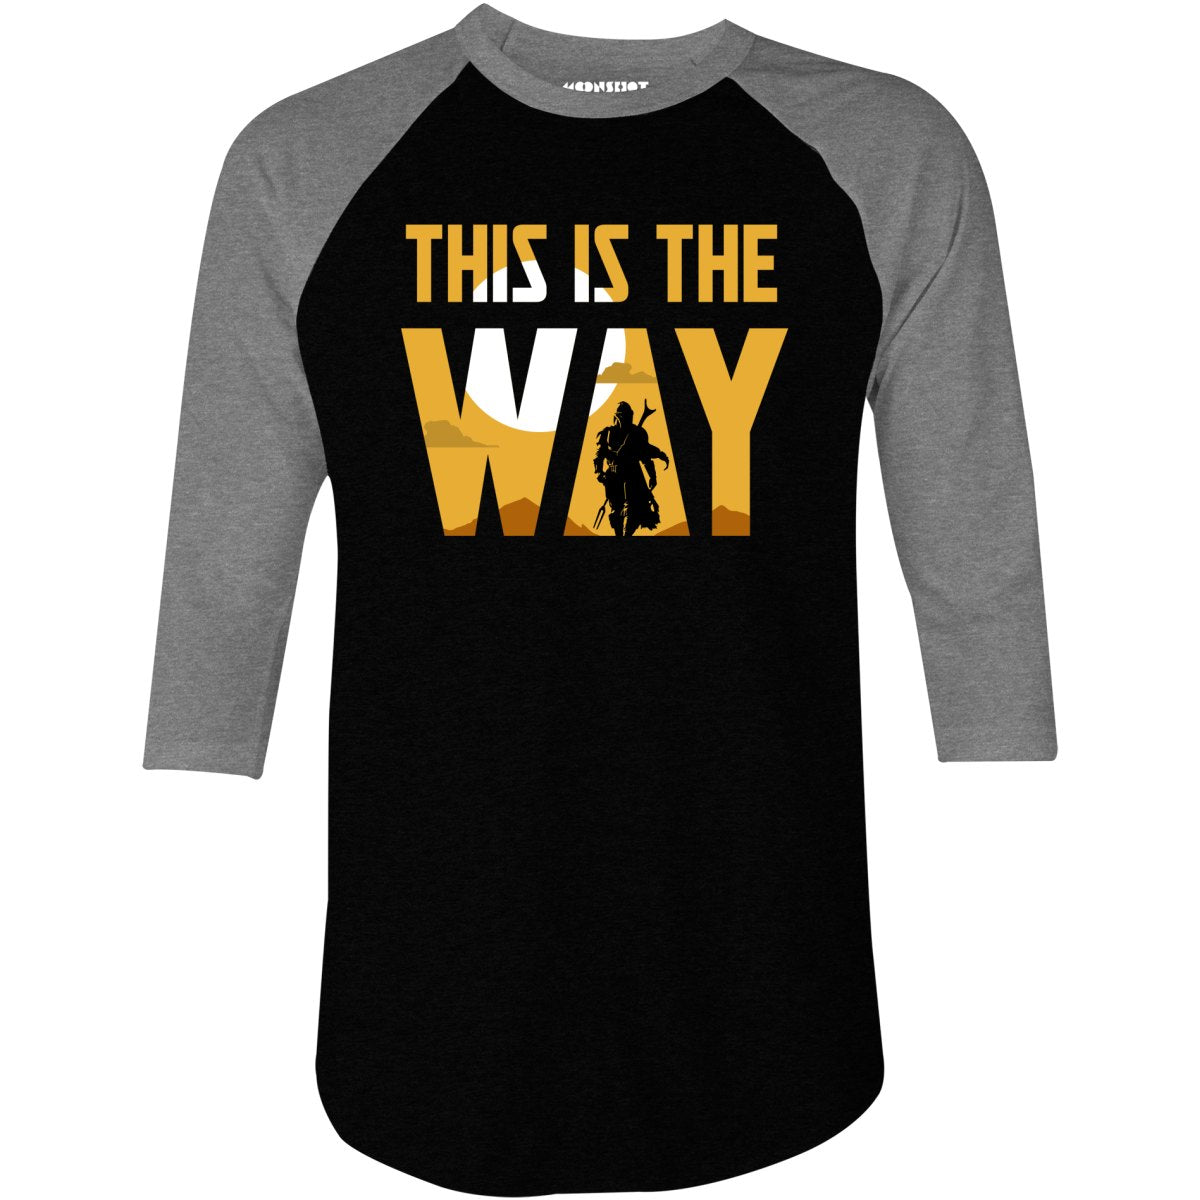 This is The Way - 3/4 Sleeve Raglan T-Shirt